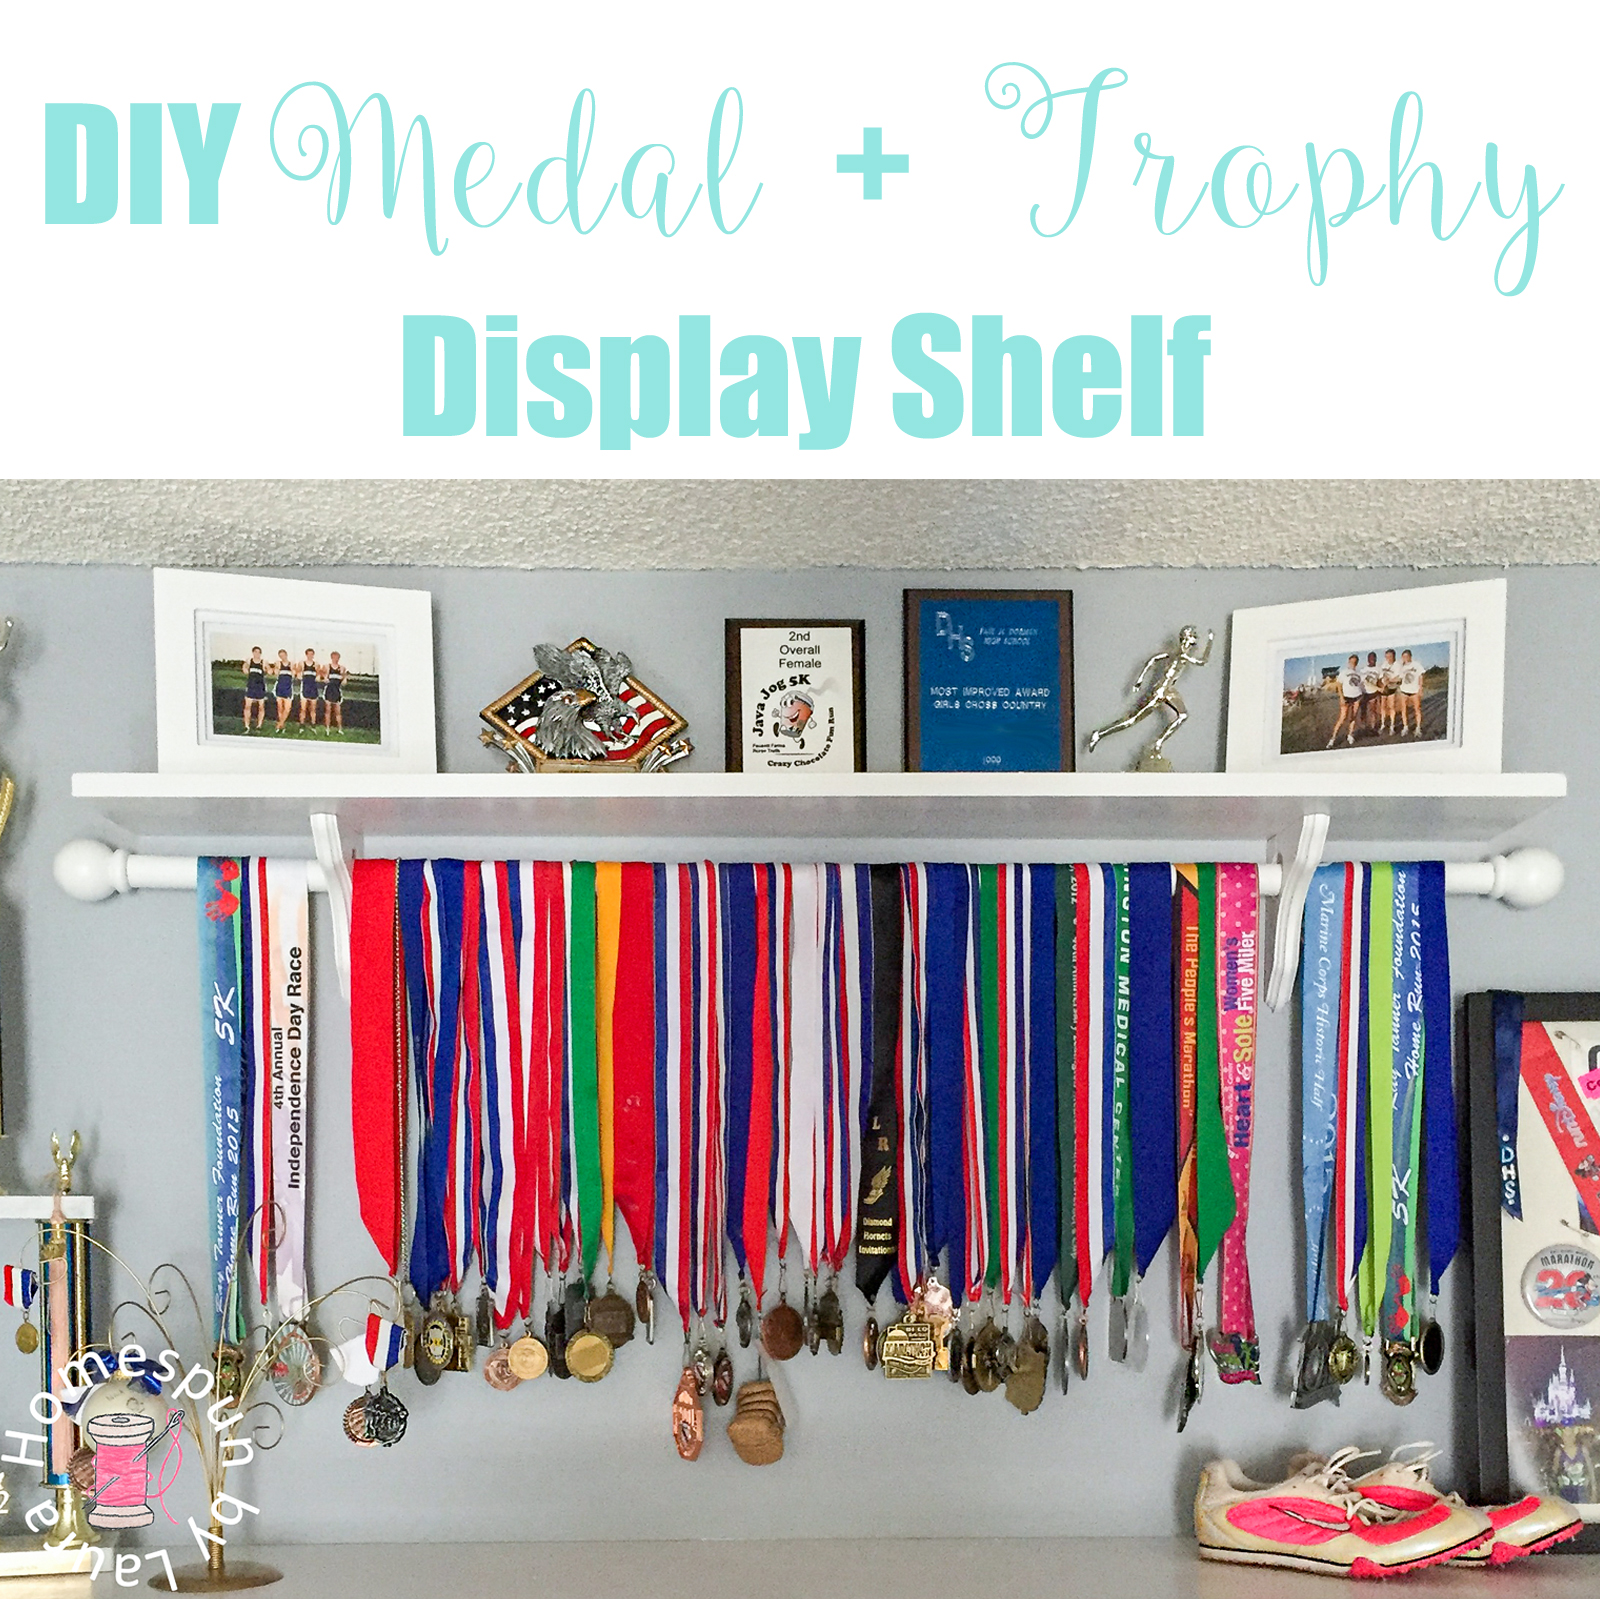 DIY Medal + Trophy Display Shelf | Homespun by Laura | DIY shelf to display running, swimming, biking, sports medals